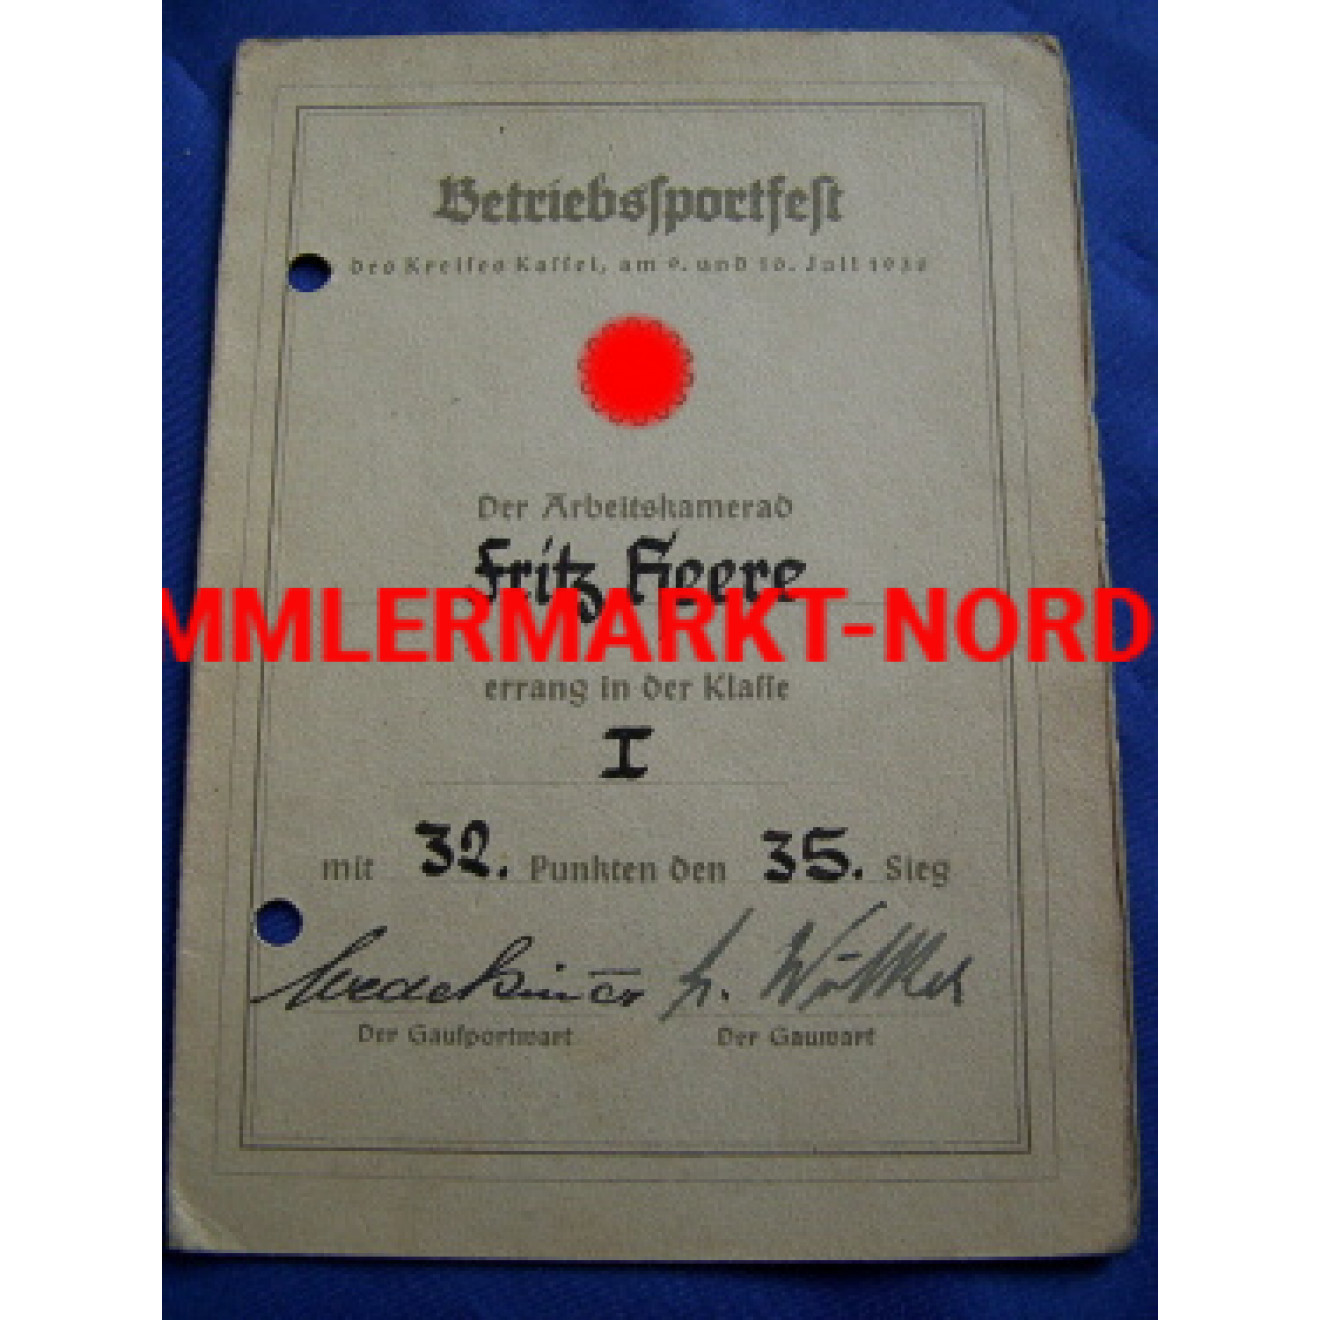 Document for the operating sport celebration of Kassel 1938